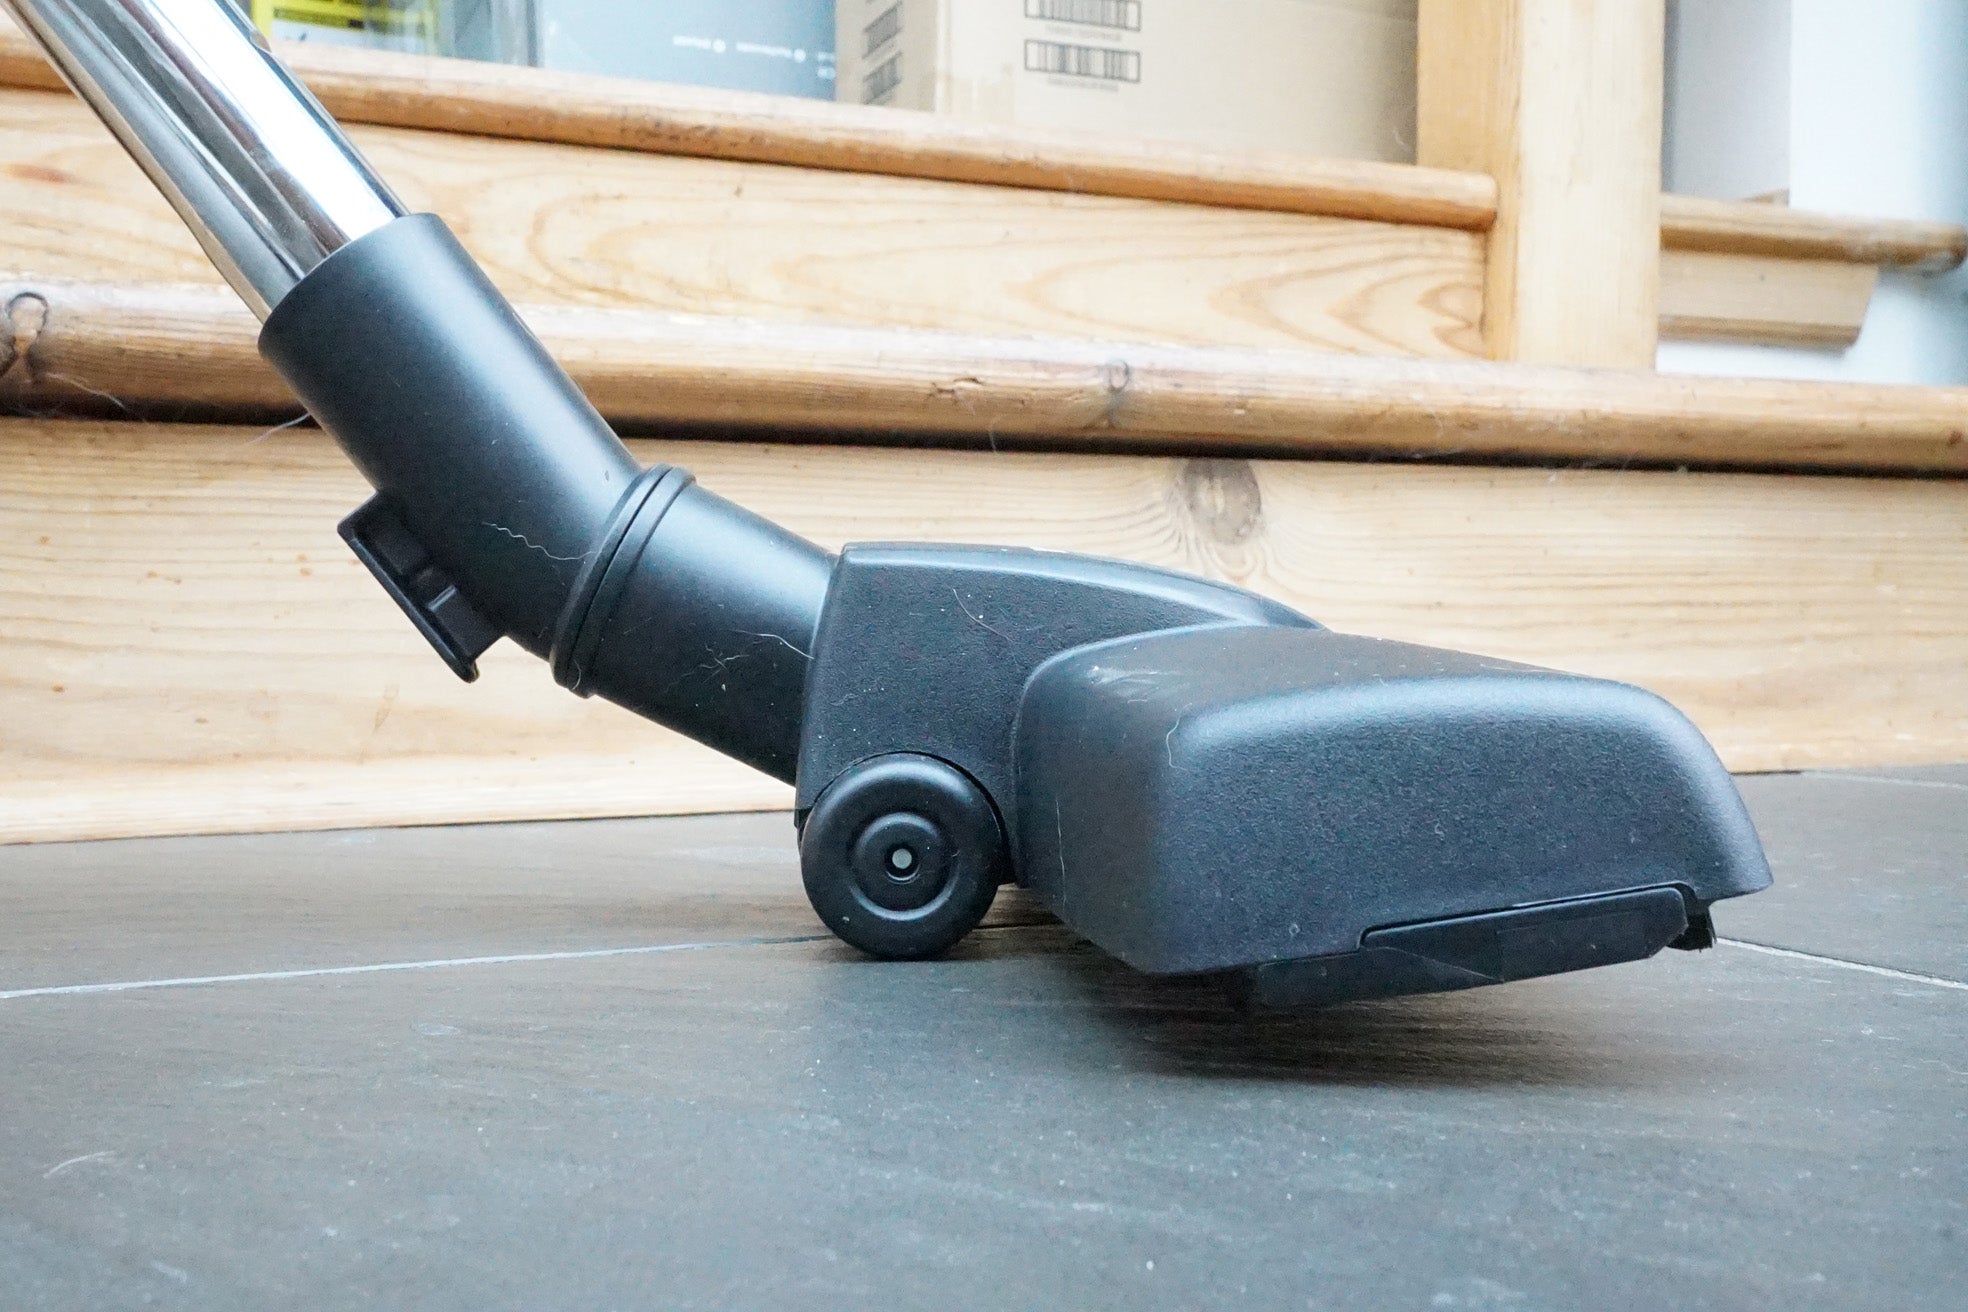 Vytronix VTBC01 vacuum cleaner head on a wooden floor.